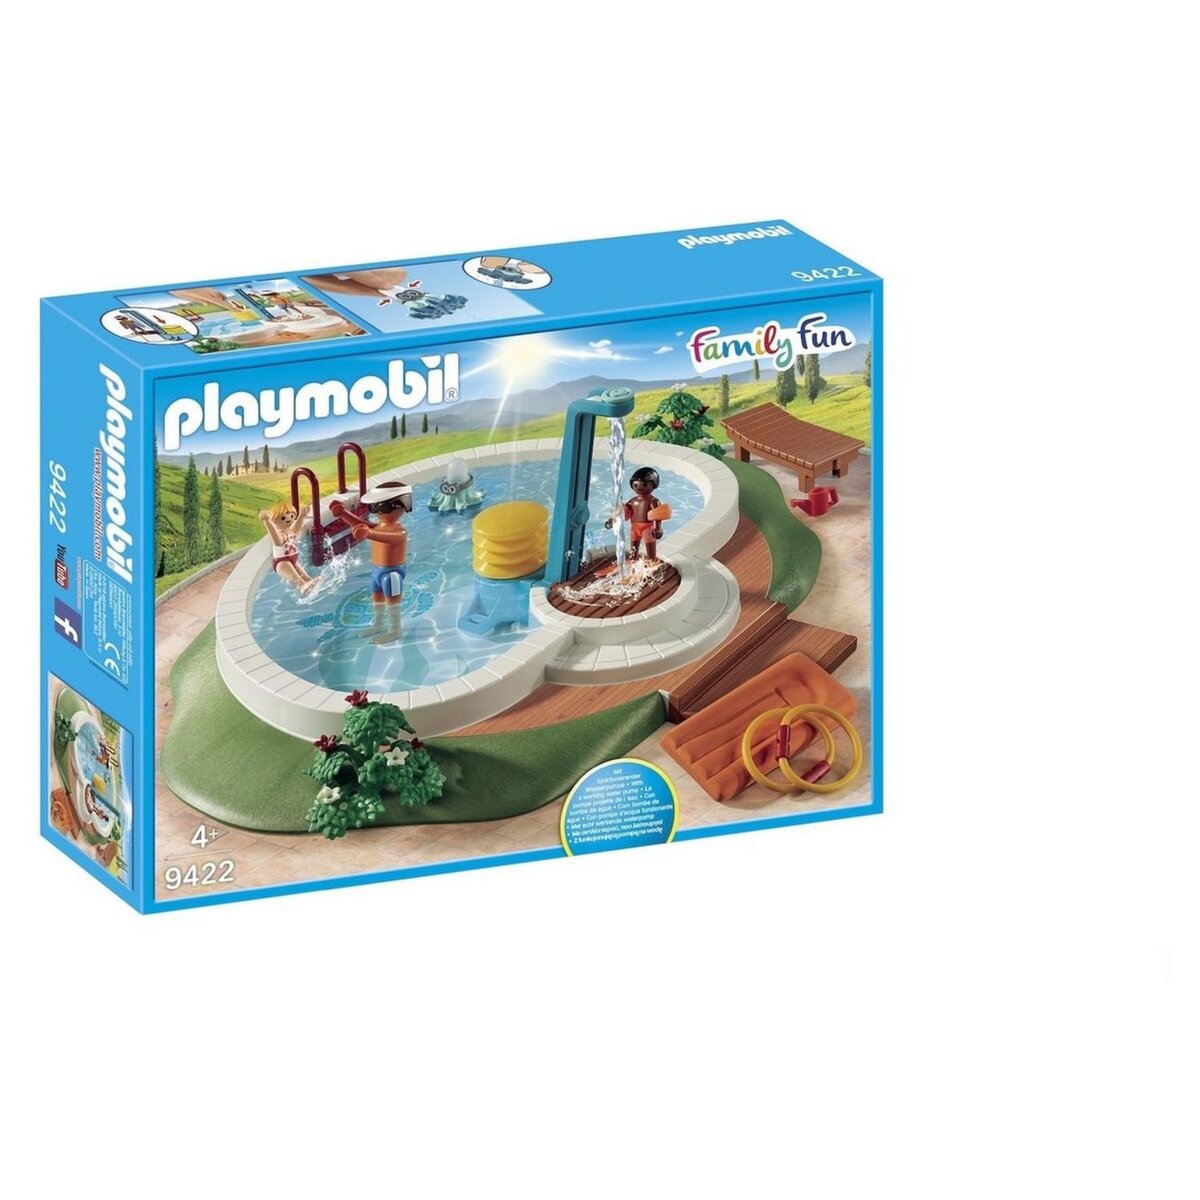 PLAYMOBIL 9422 - Family Fun - Piscine avec douche pas cher 